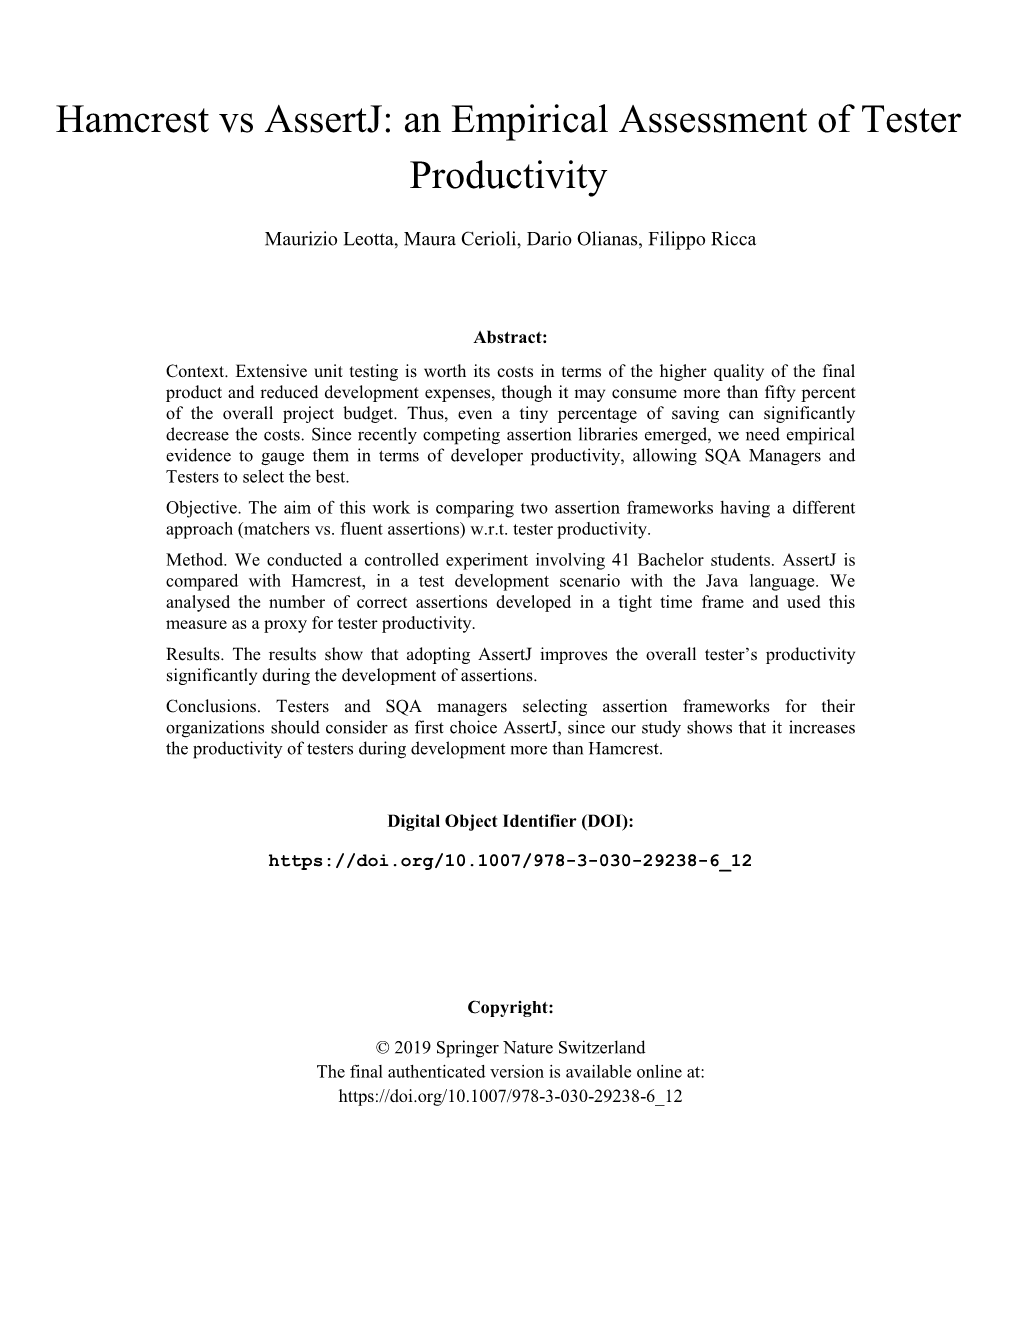 Hamcrest Vs Assertj: an Empirical Assessment of Tester Productivity